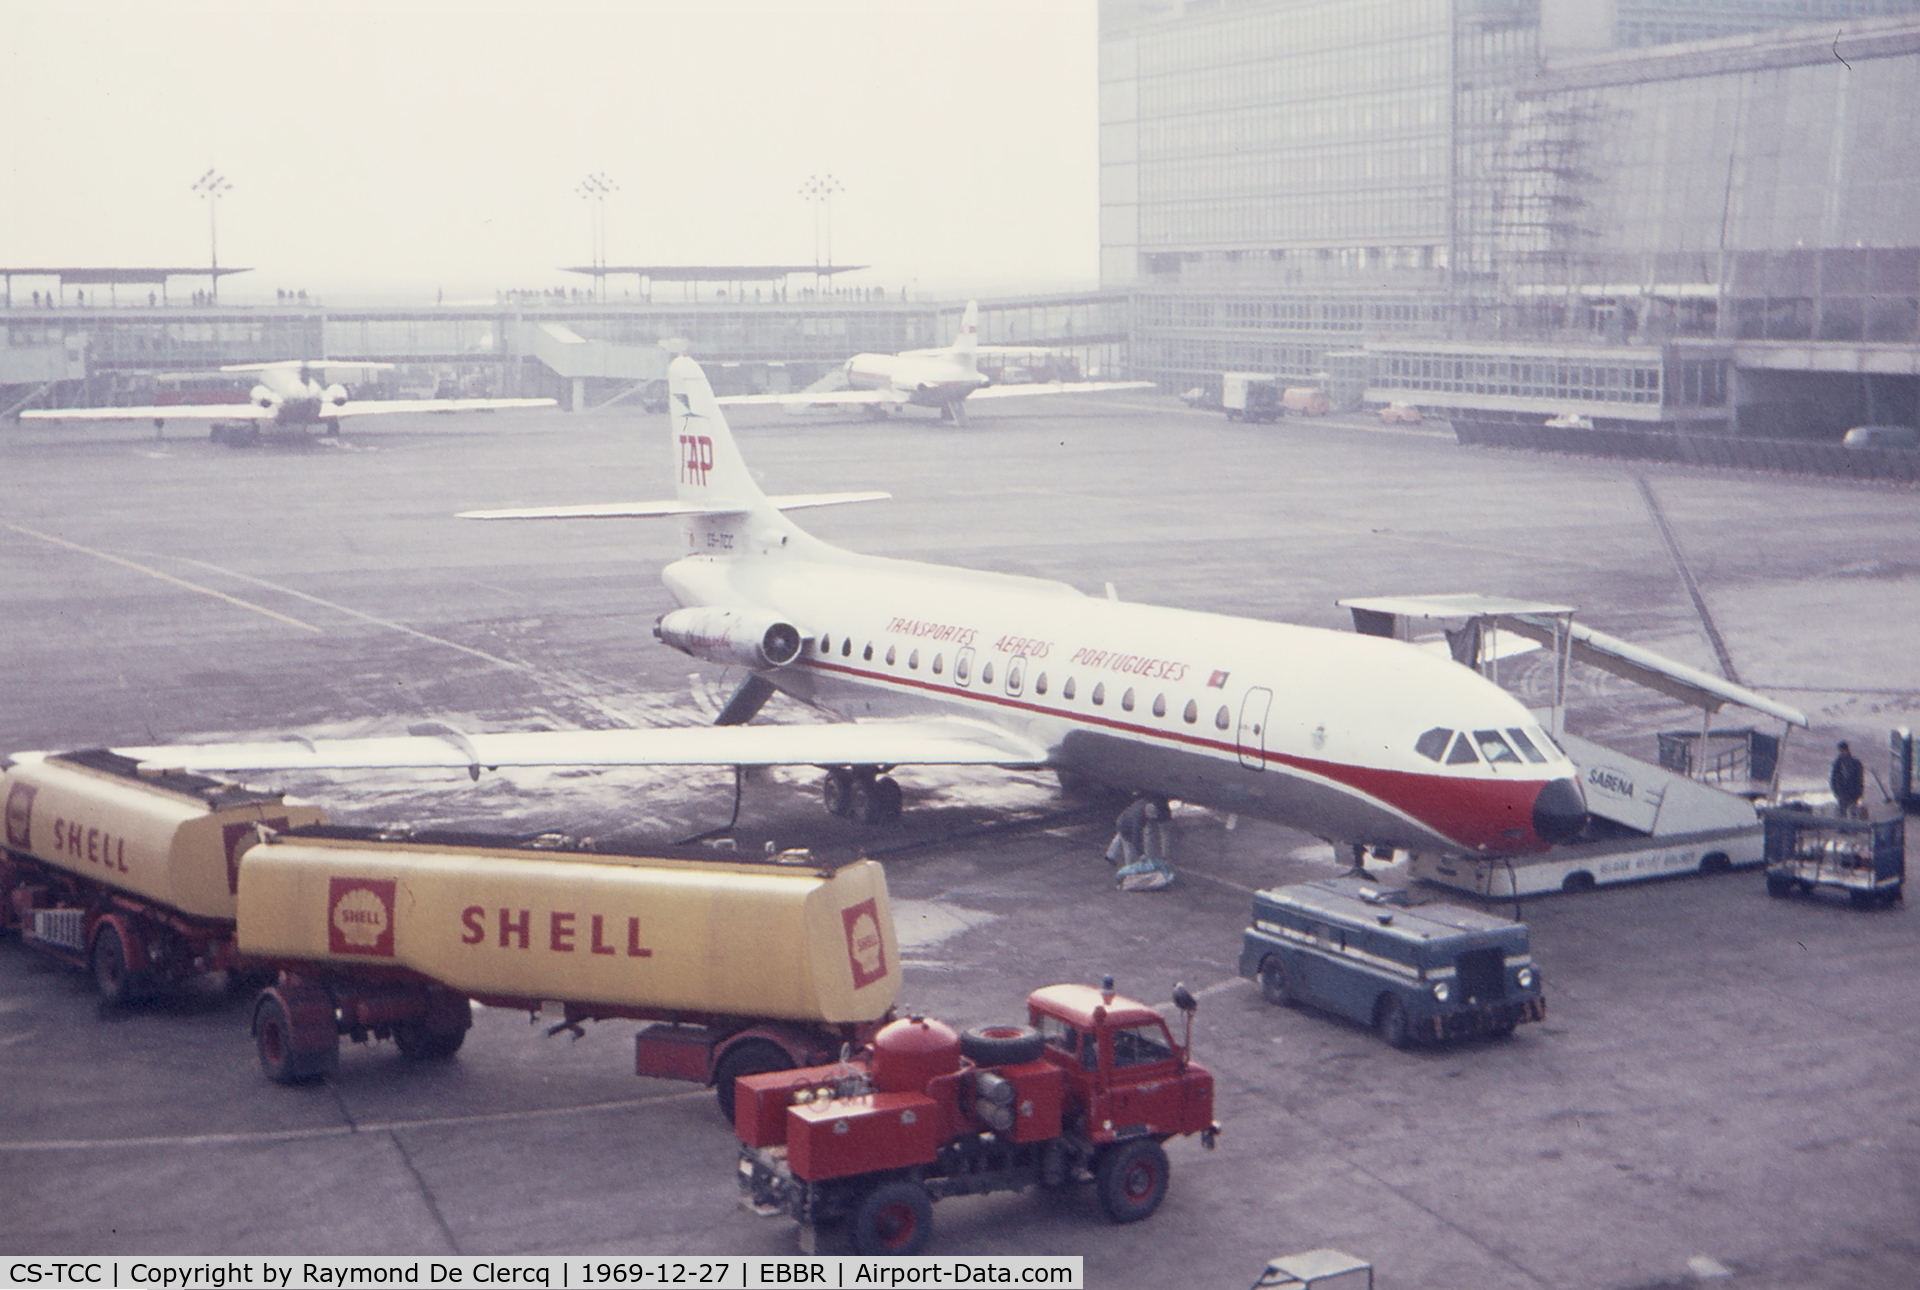 CS-TCC, 1963 Sud Aviation SE-210 Caravelle VI-R C/N 137, Brussels Airport on 27-12-69